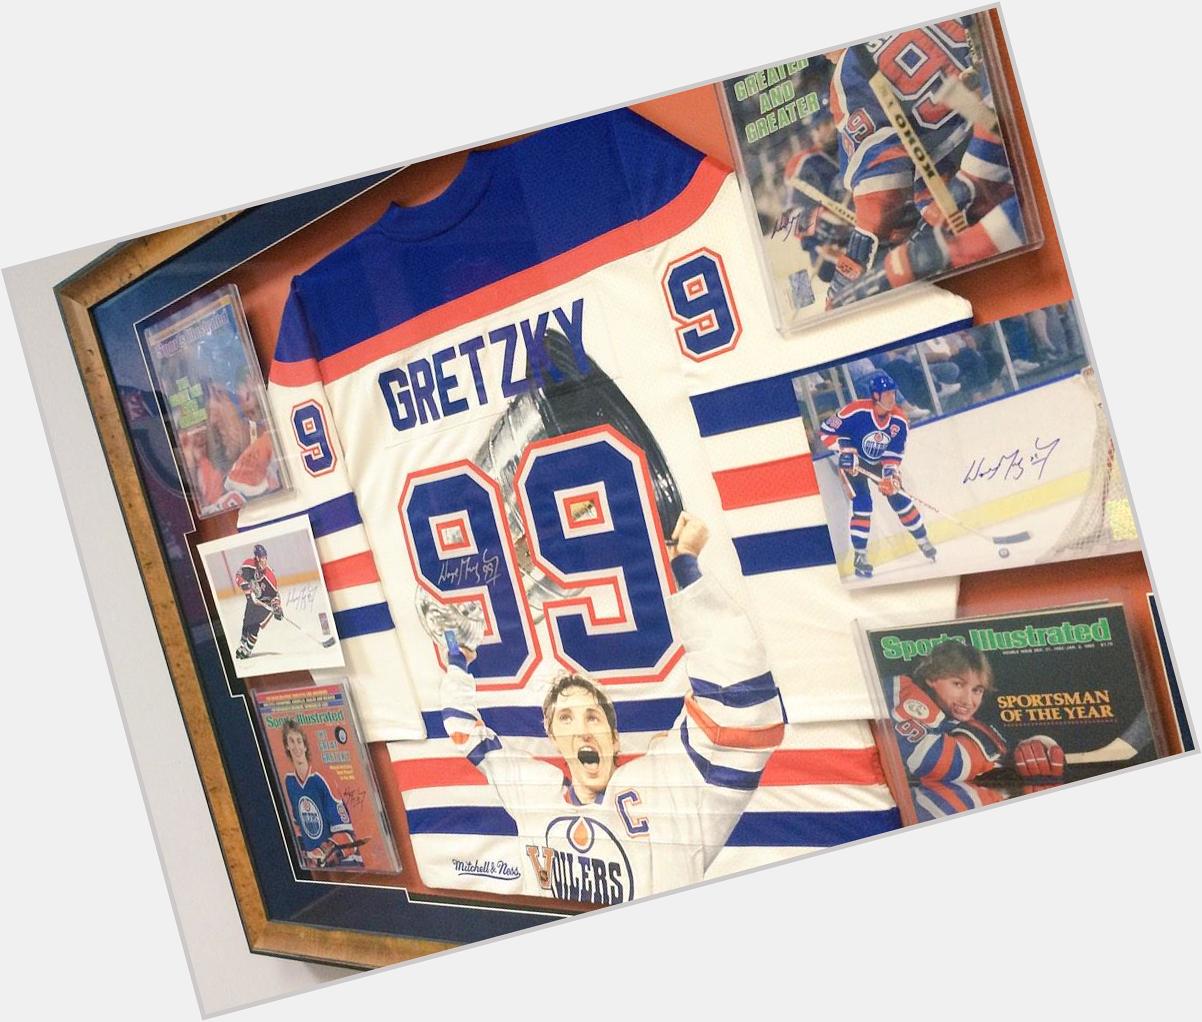 Happy Birthday to himself, Wayne Gretzky!  